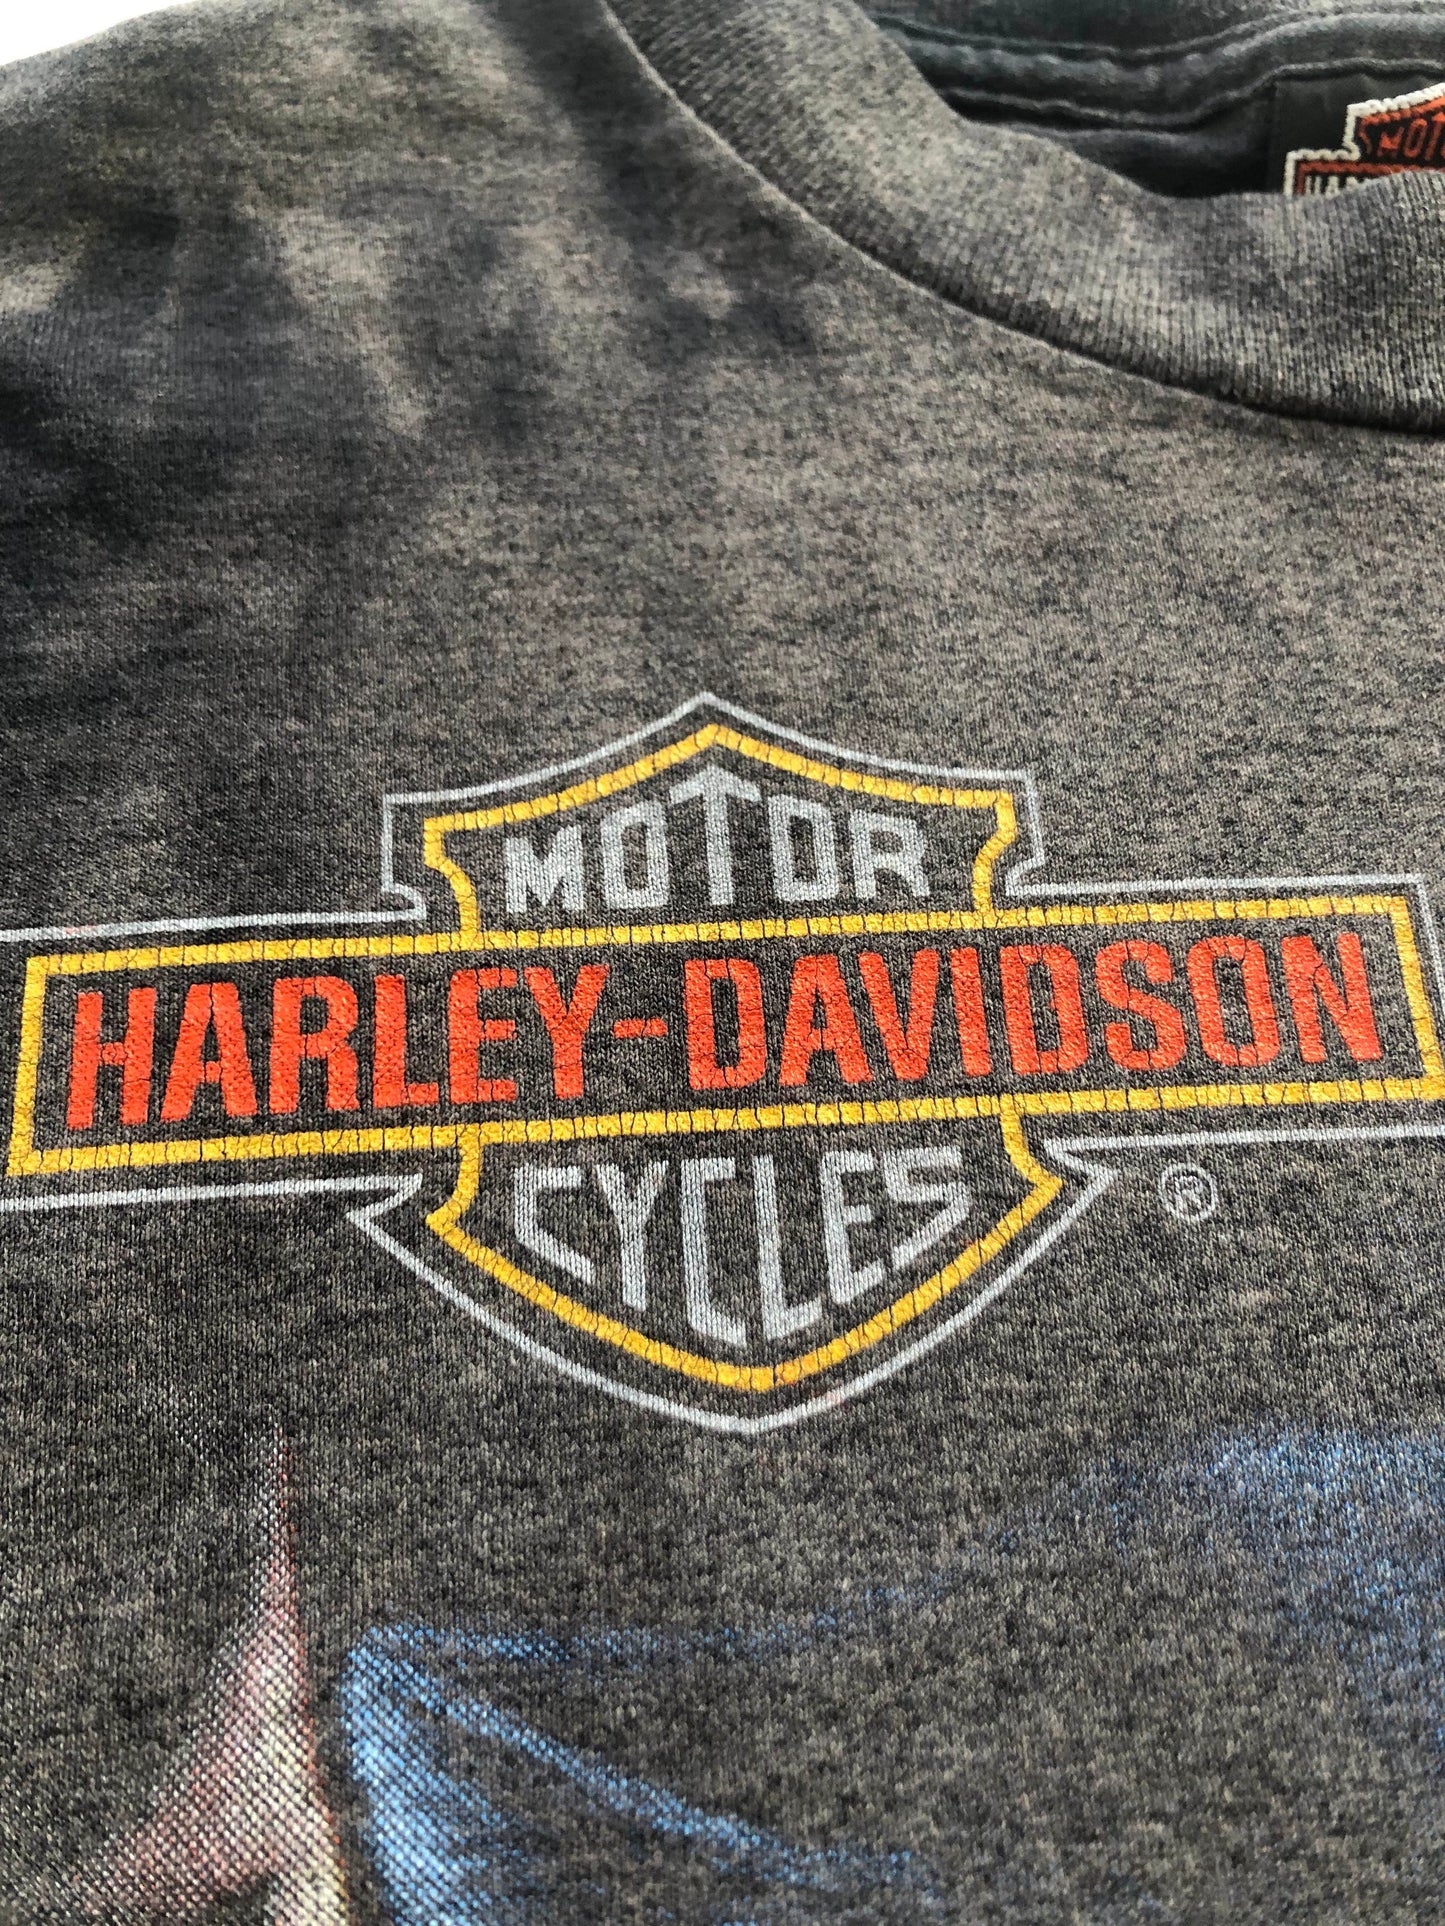 Vintage 3D EMBLEM Harley Davidson T-Shirt Made in USA Animal Tee